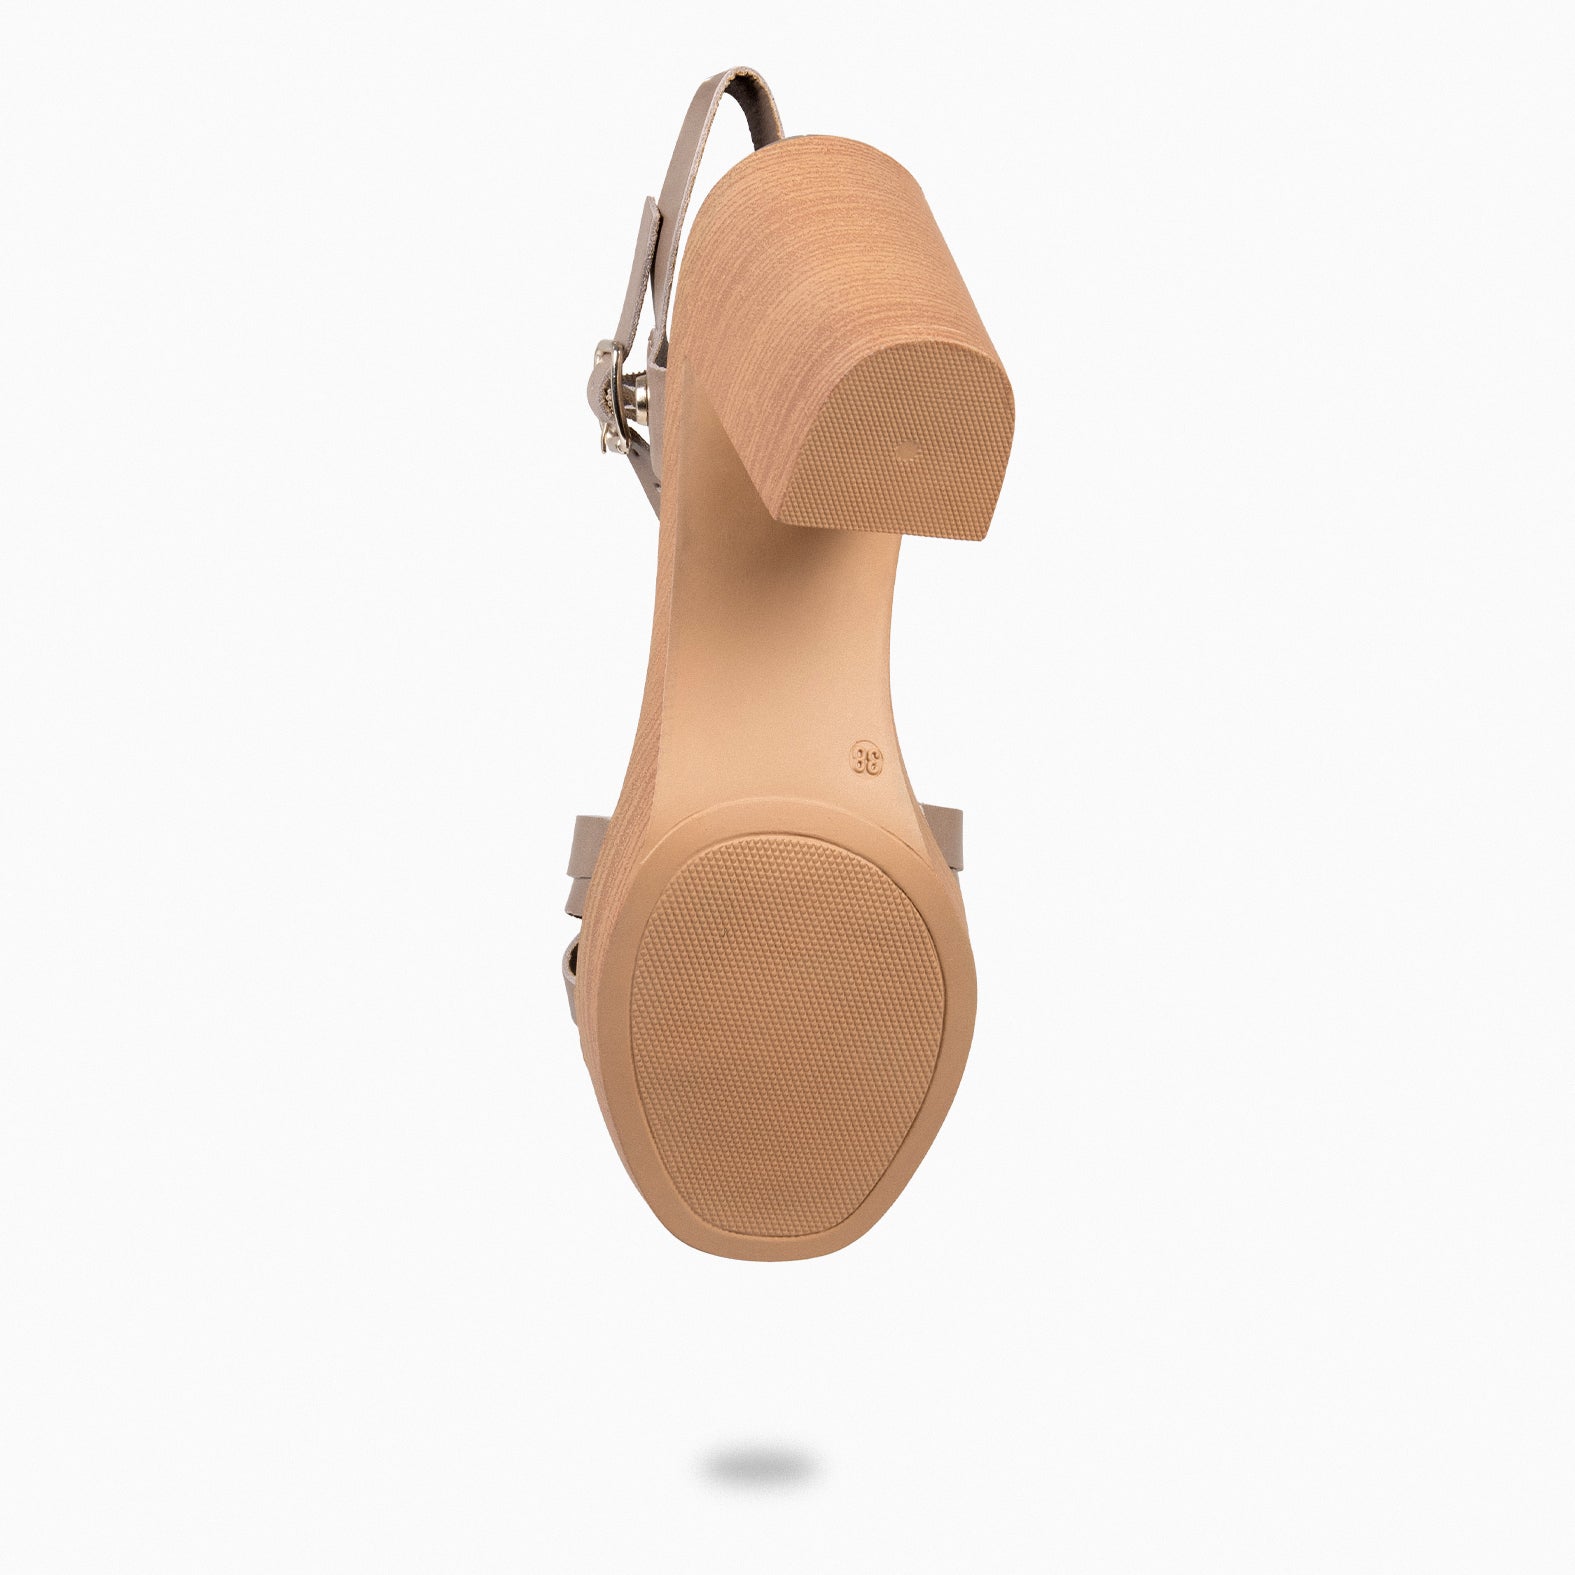 AROA - TAUPE High-heel Sandals